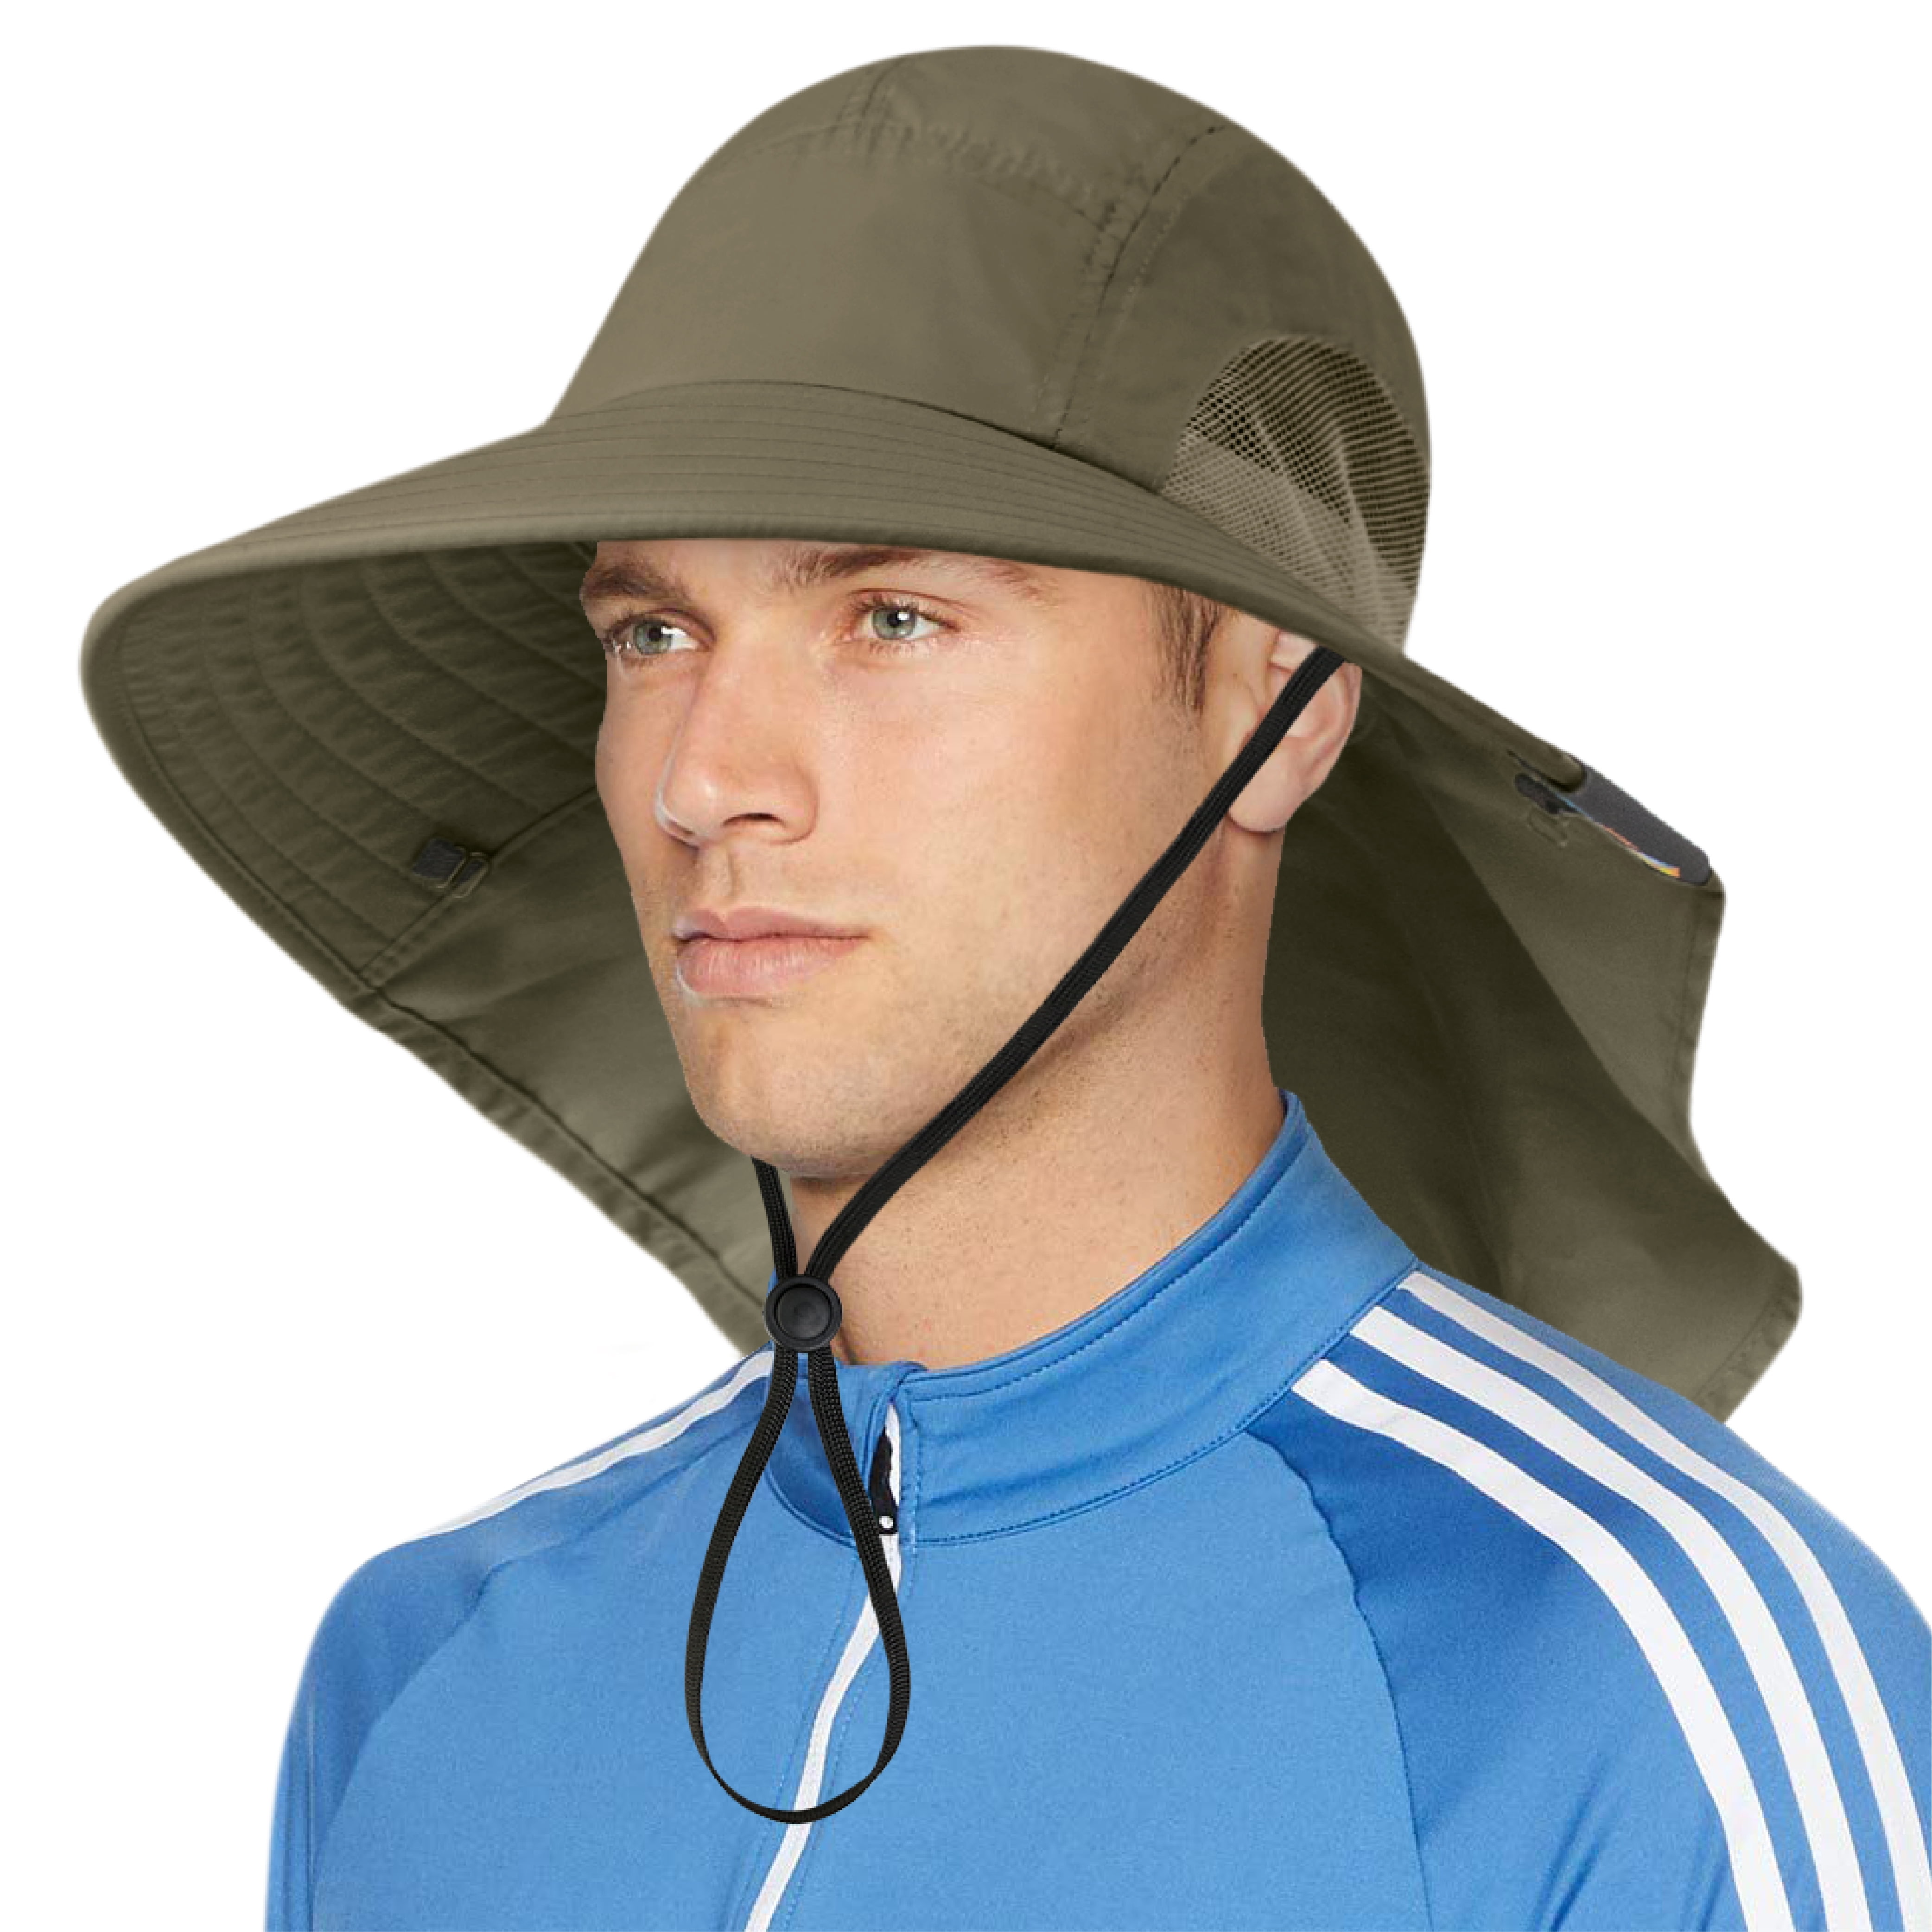 Hiking Cycling Camping Tirrinia Outdoor Sun Protection Fishing Cap with Neck Flap Wide Brim Hat for Men Women Baseball Hunting Backpacking Garden